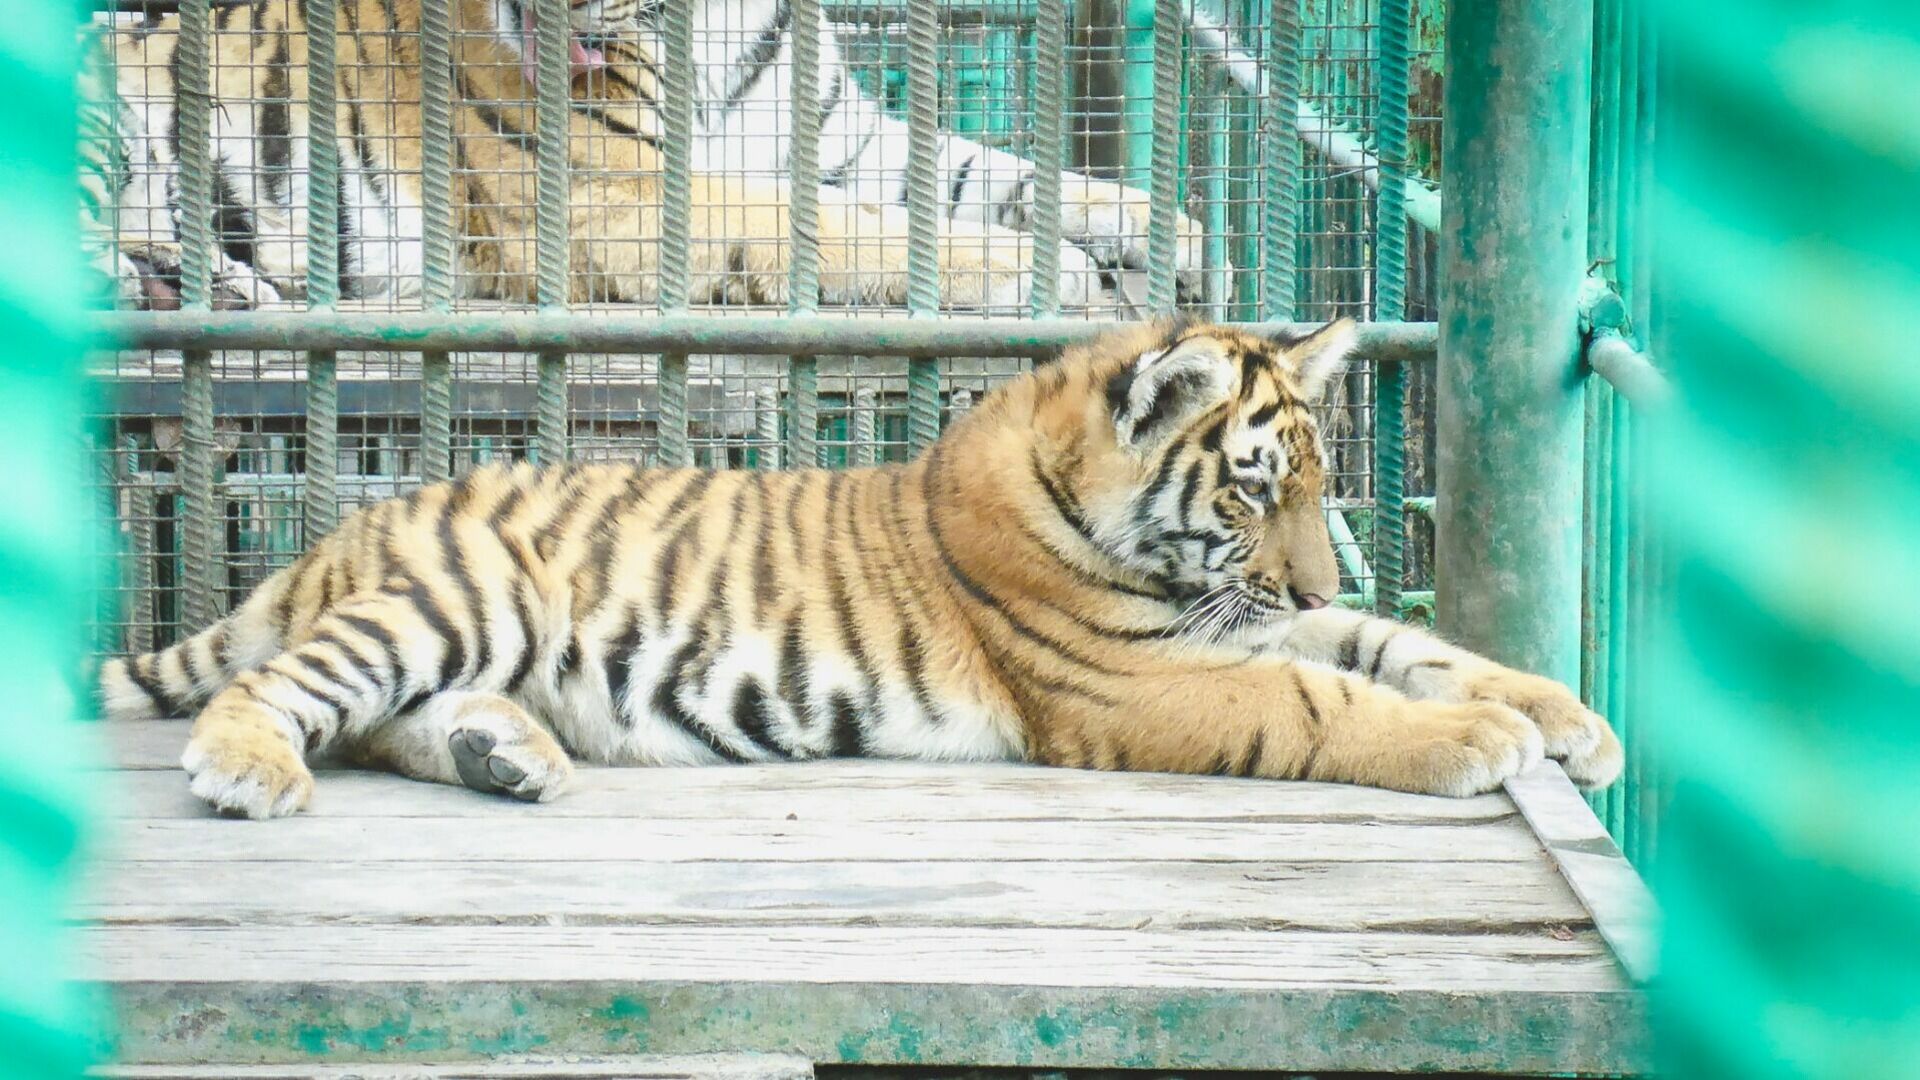 Сотрудники Ленинградского зоопарка успешно вернули в клетку сбежавшего тигра